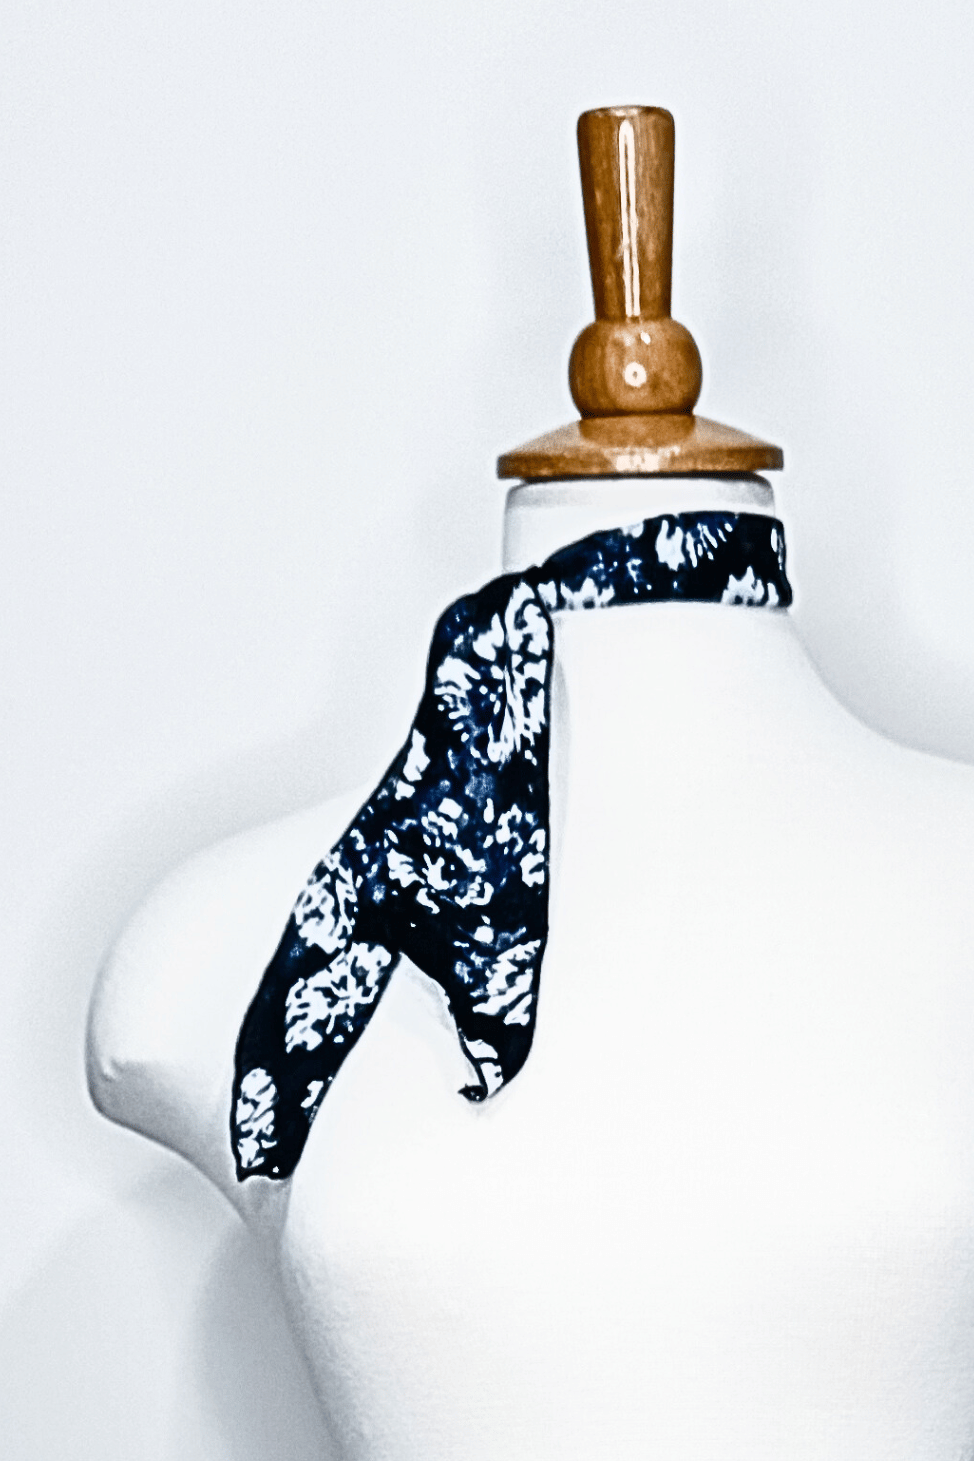 Multiway Tie in Carnation Black Background from Diane Kroe